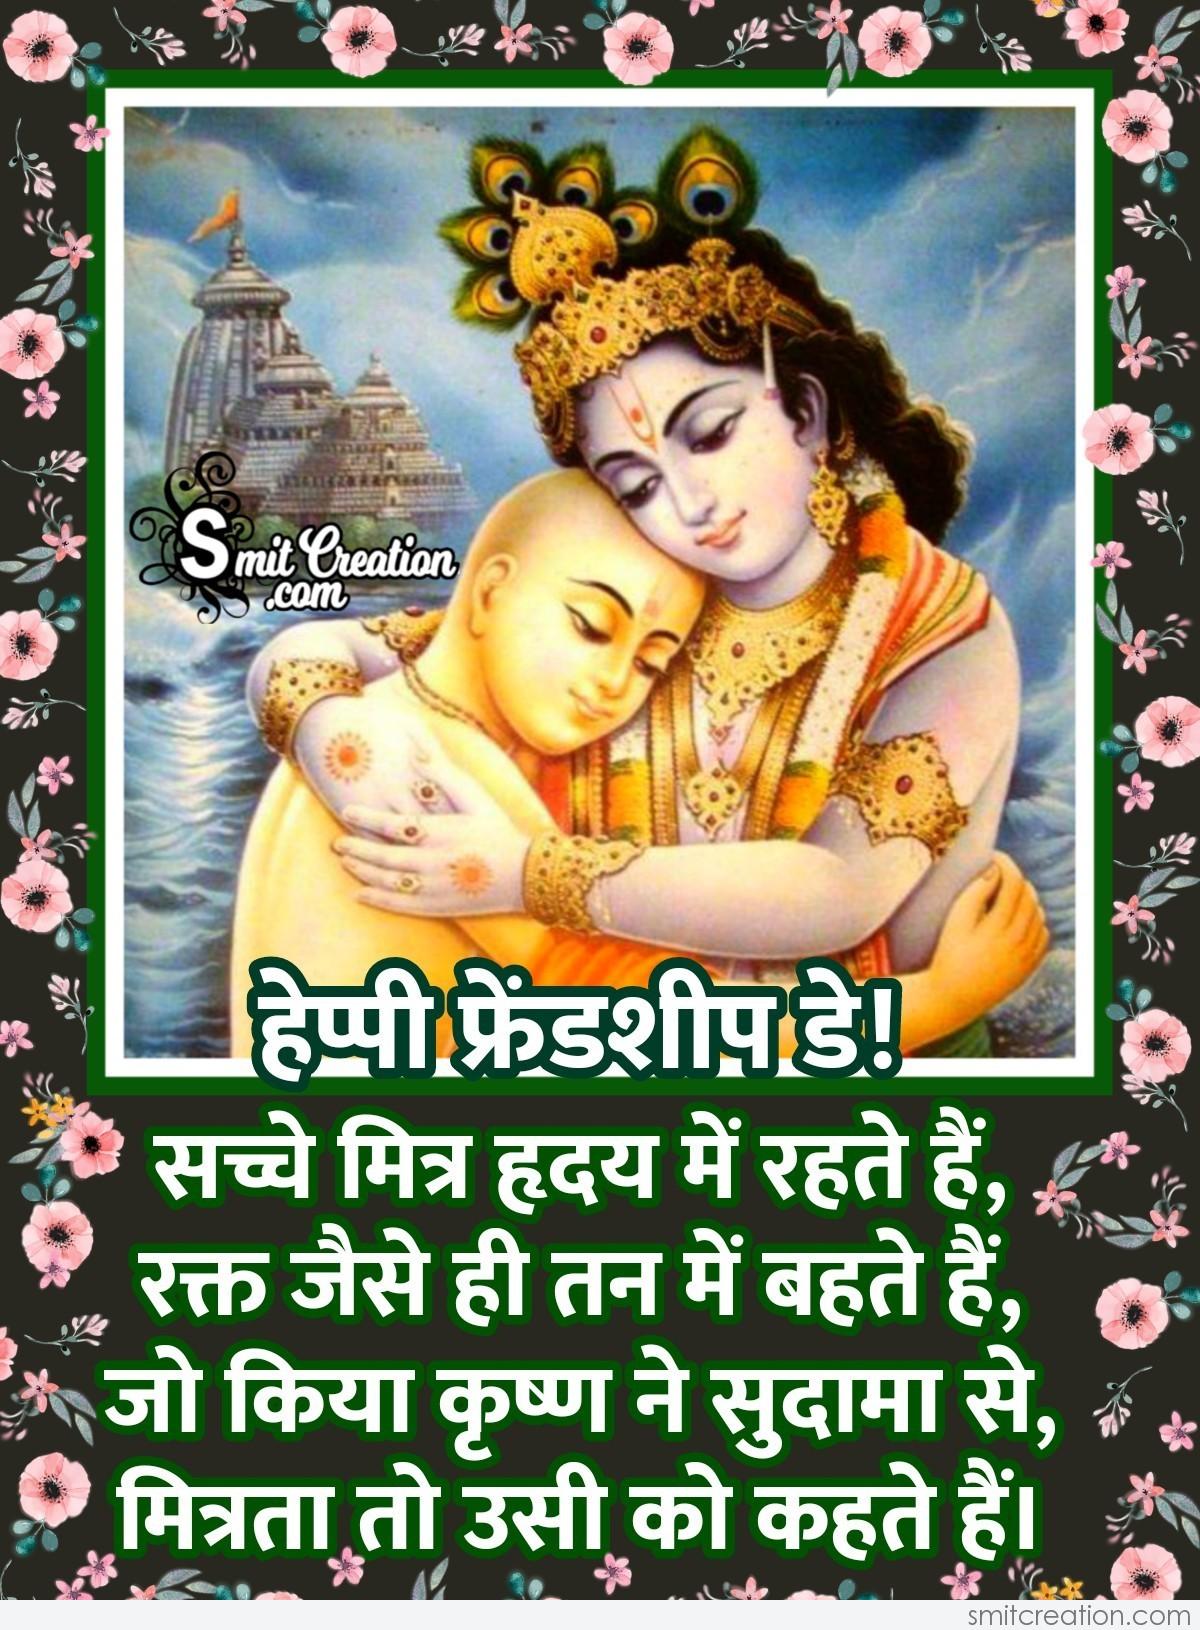 Friendship Day Hindi Message – Krishna Sudama True Friendship - Smitcreation.com